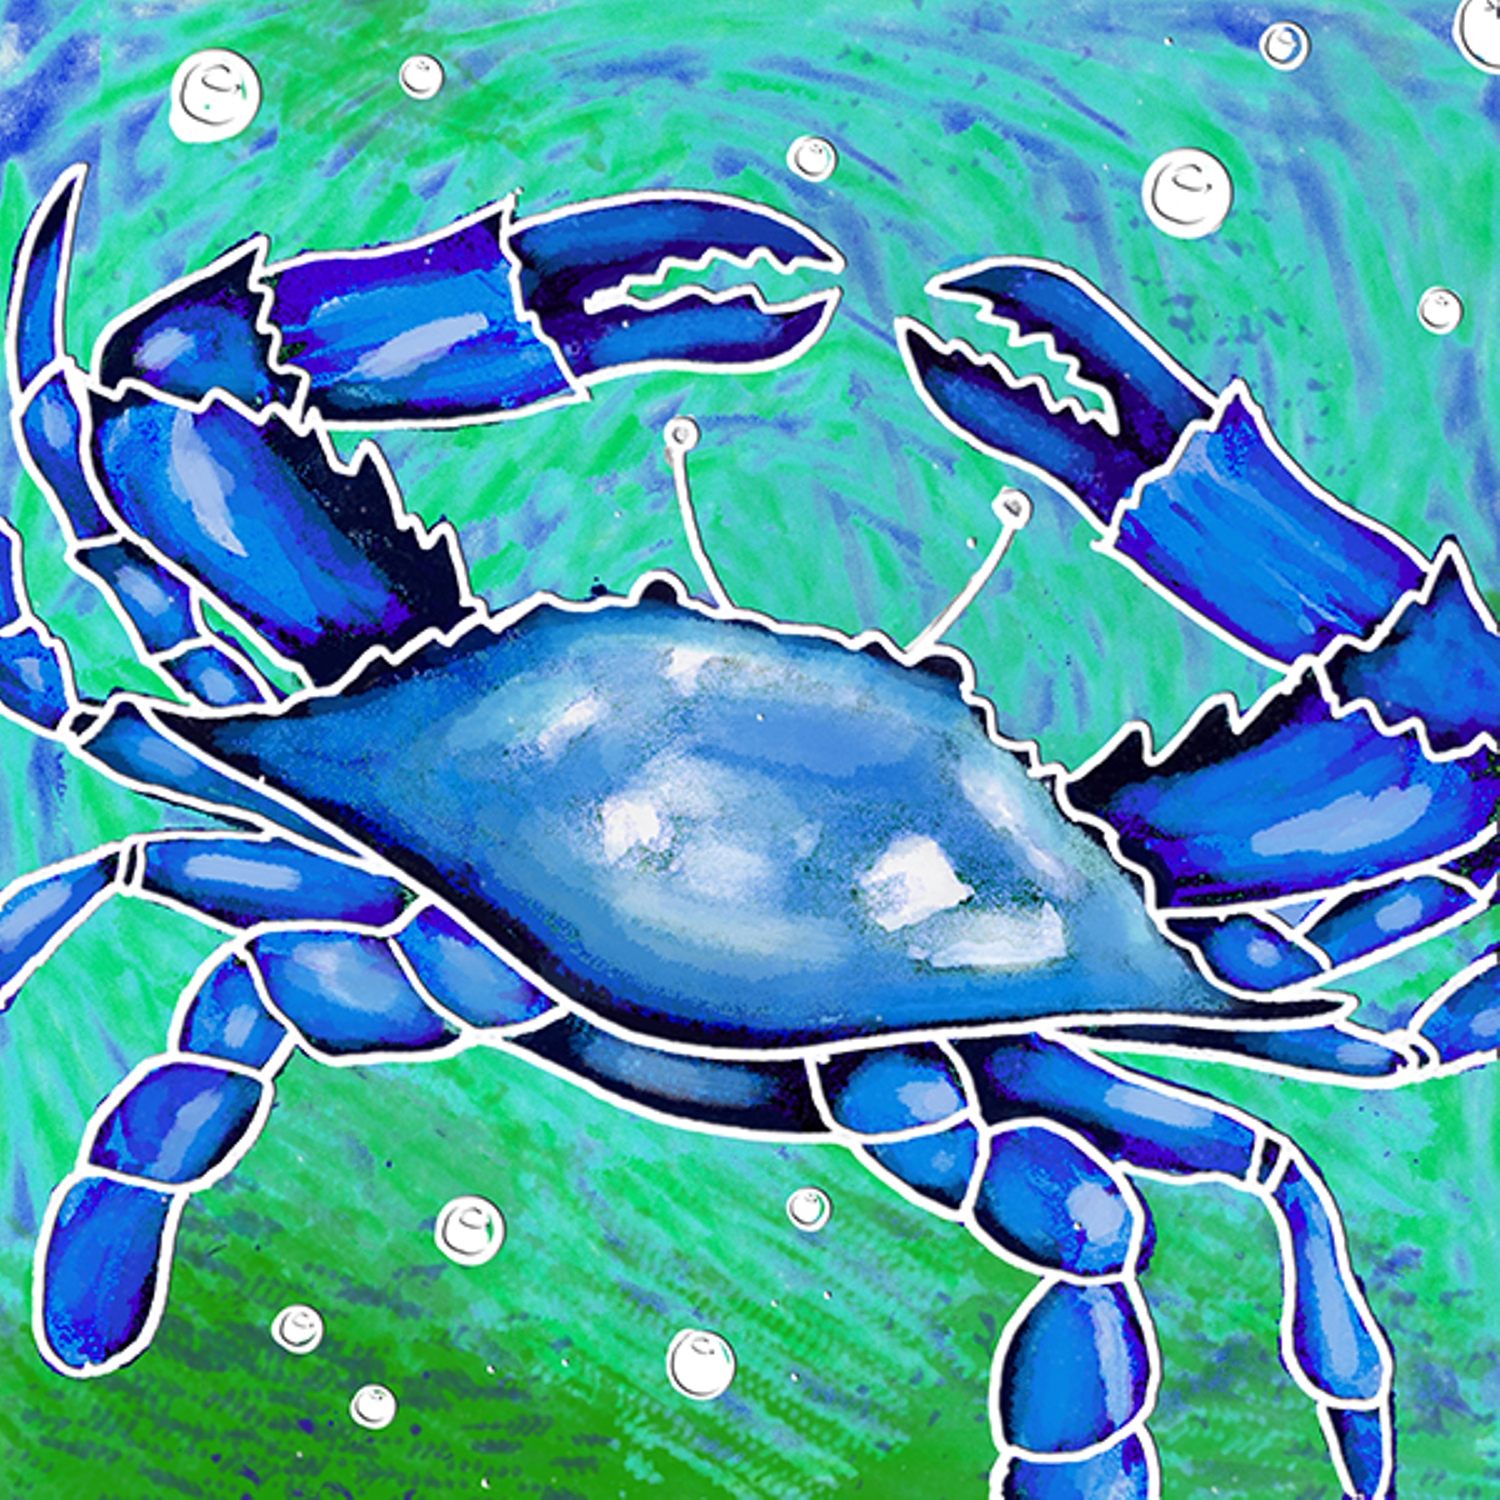 Chesapeake Bay Bright Blue Crab Ceramic Tile 8 X 8 Inches